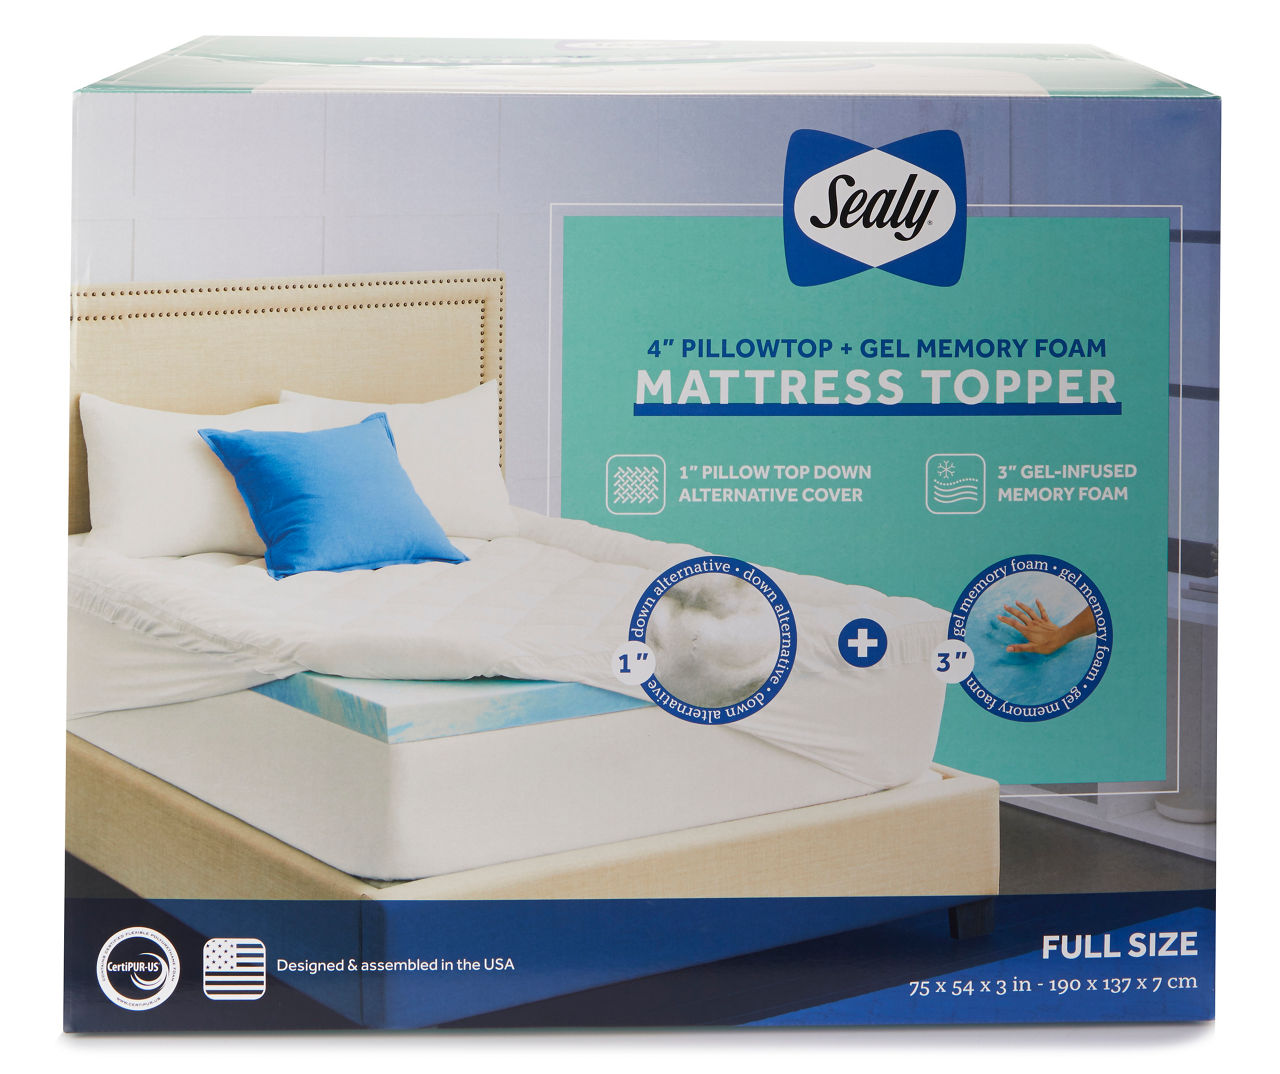 Sealy Sealy 4 Pillowtop & Gel Memory Foam Mattress Topper